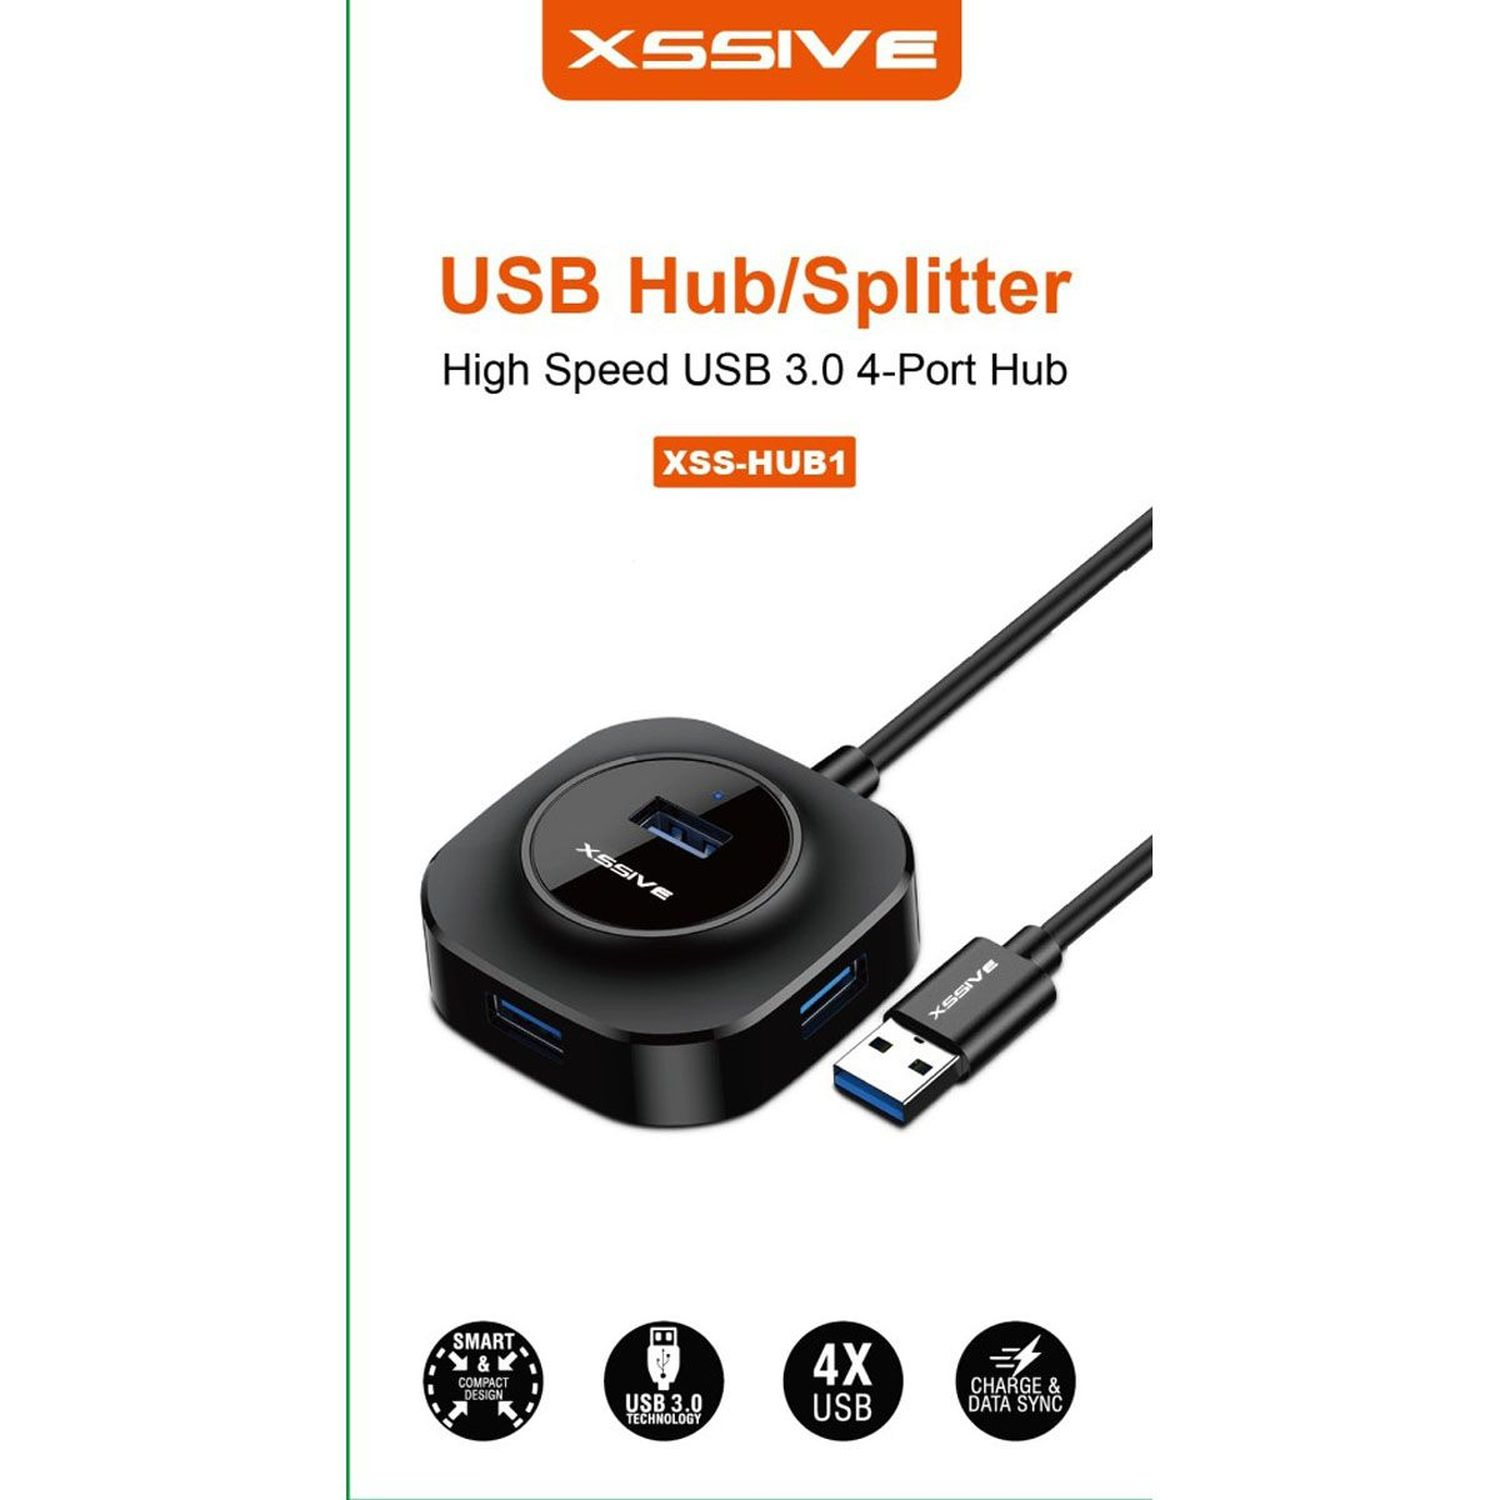 USB Speed Adapter, XSSIVE Schwarz Hub, Super